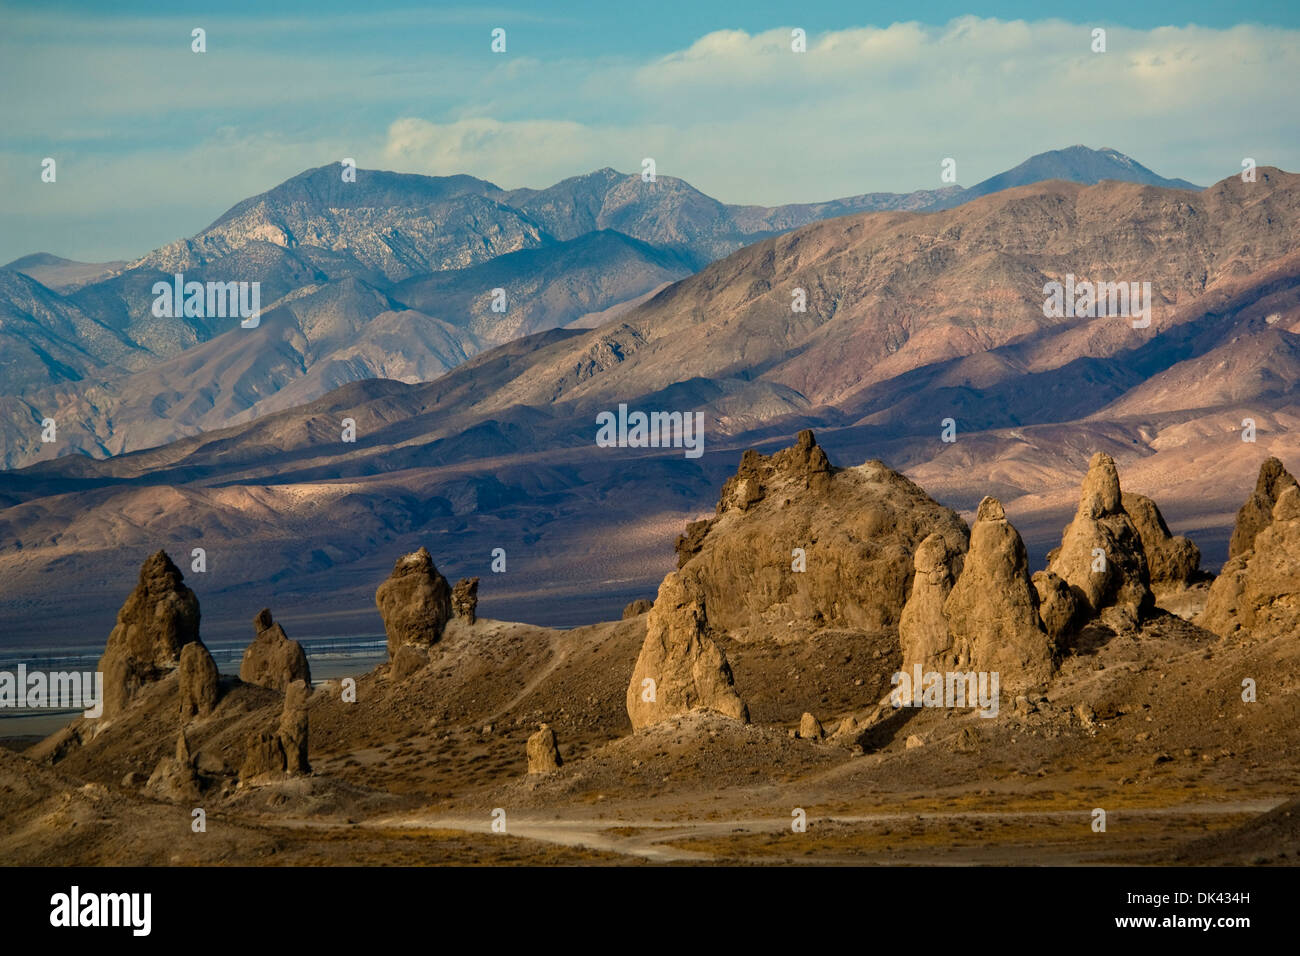 Tufa rock formations at the Trona Pinnacles, California Stock Photo